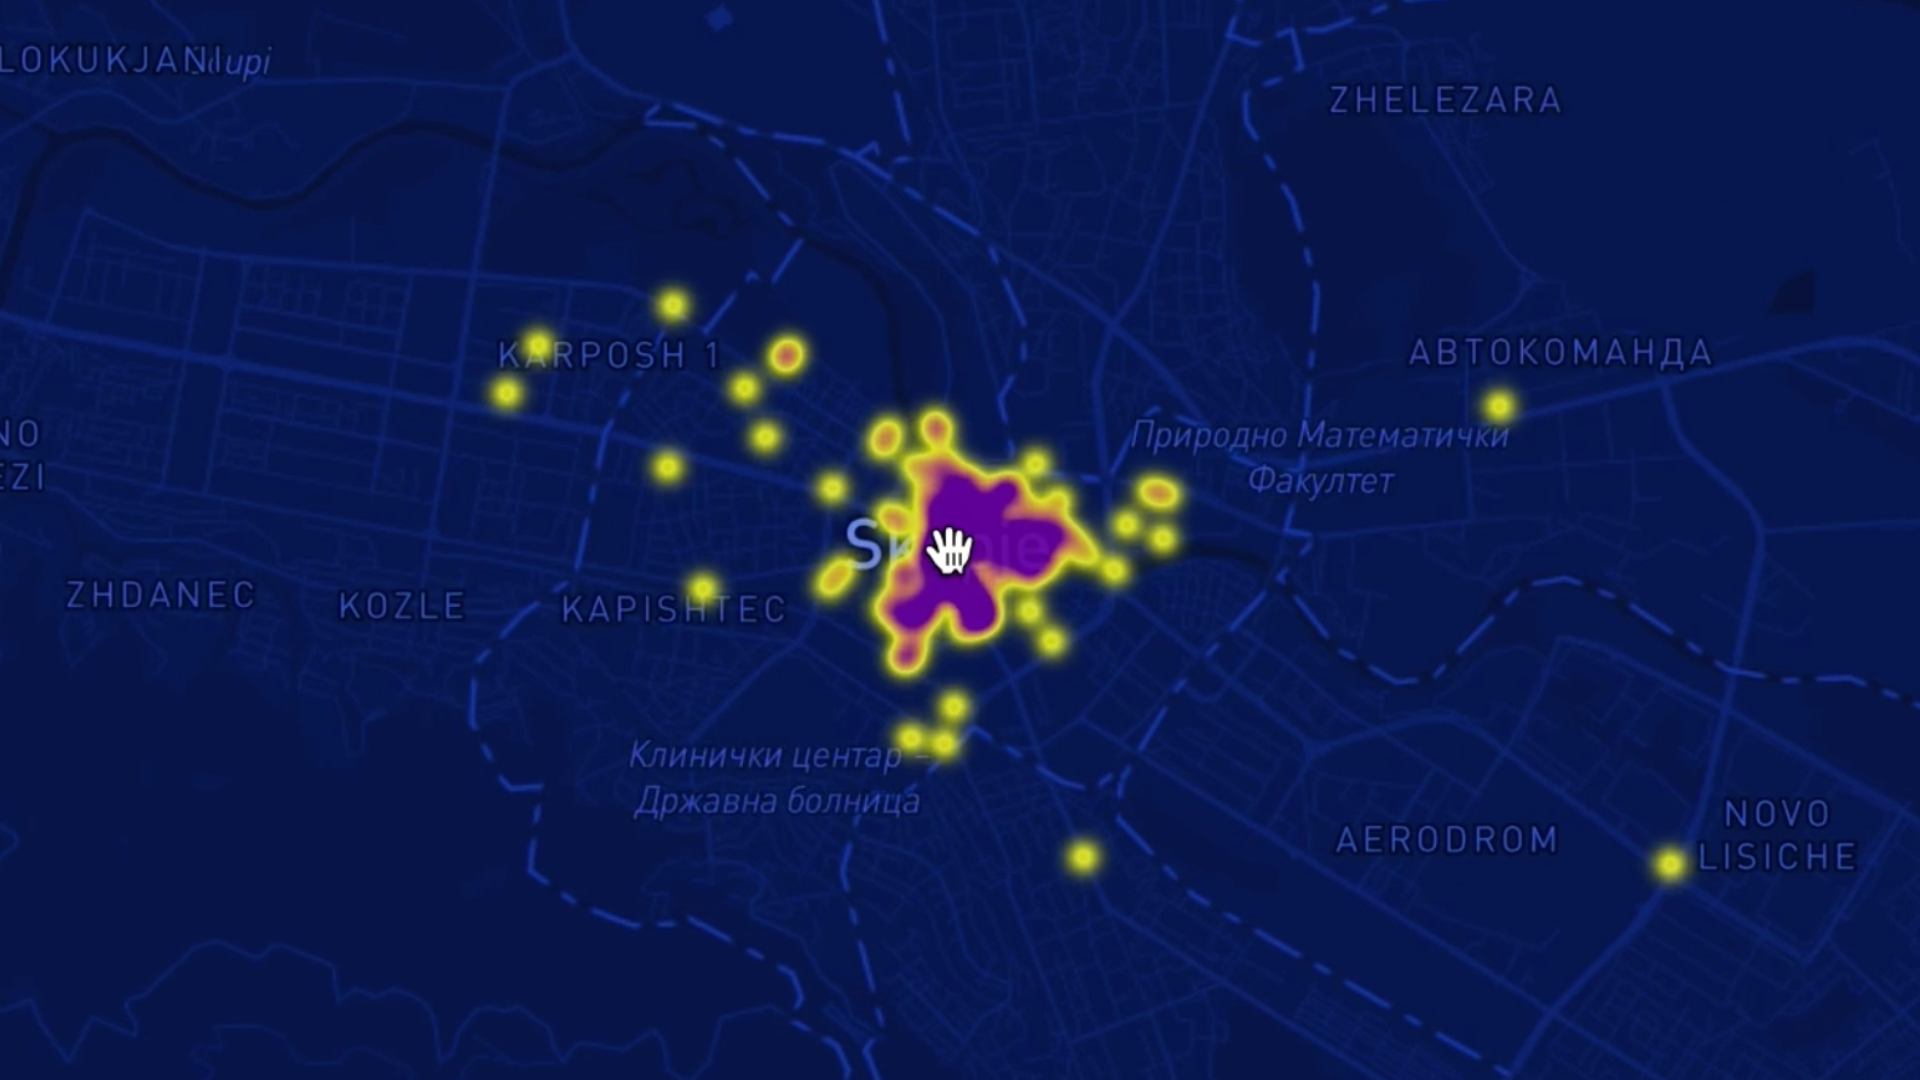 Skopje 2014 According to ChatGPT